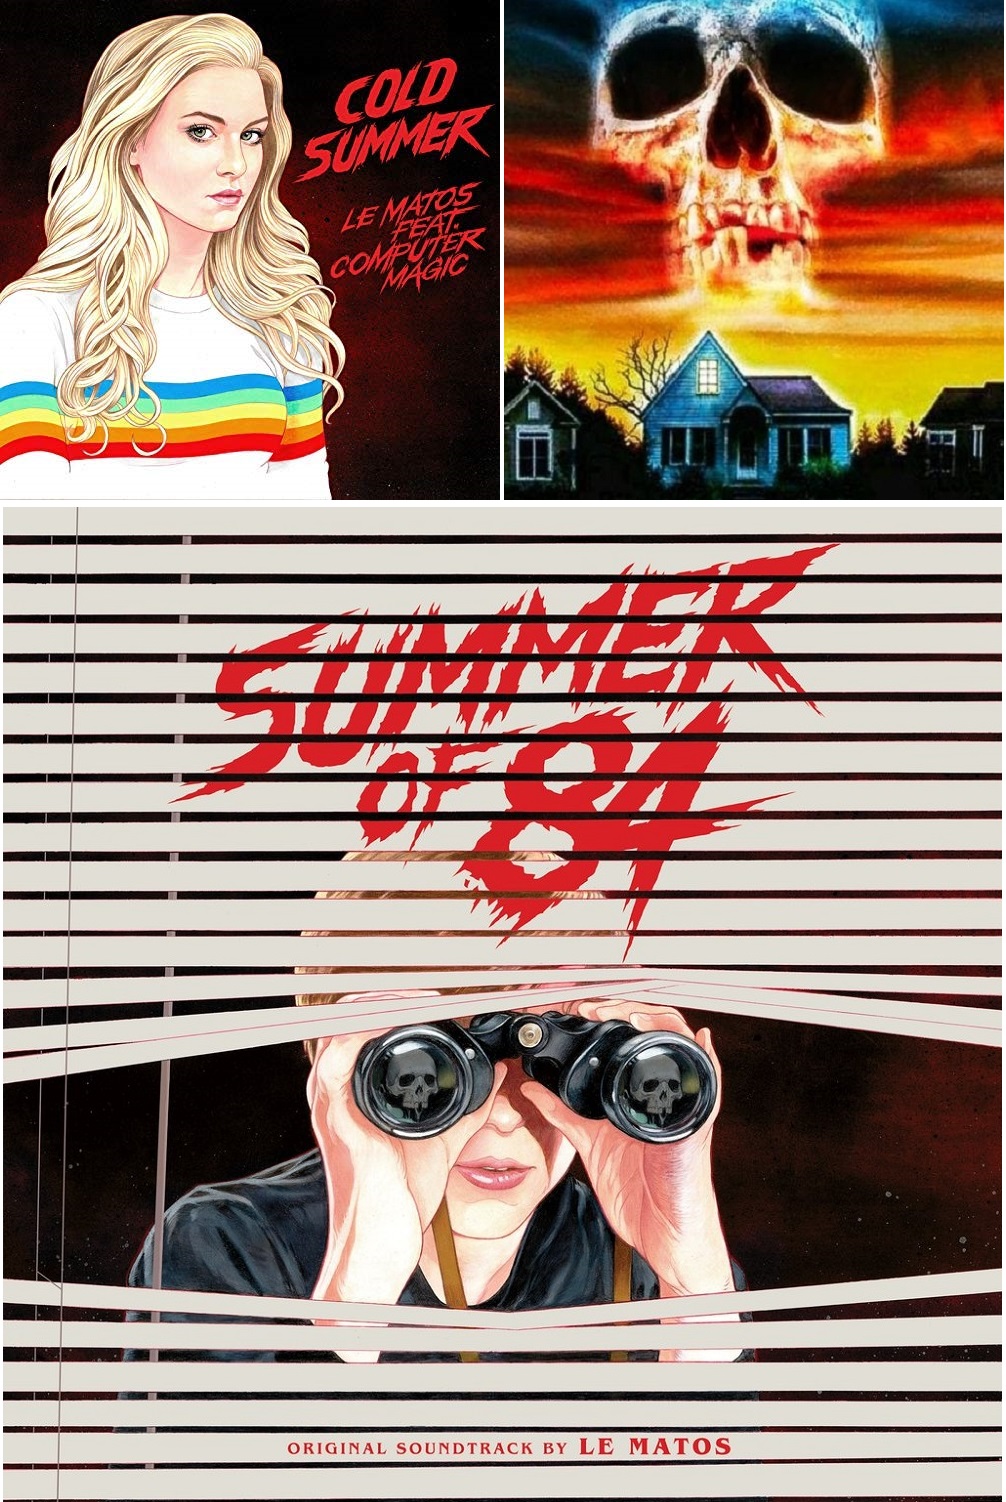 Summer of '84 & Cold Summer (feat. Computer Magic)